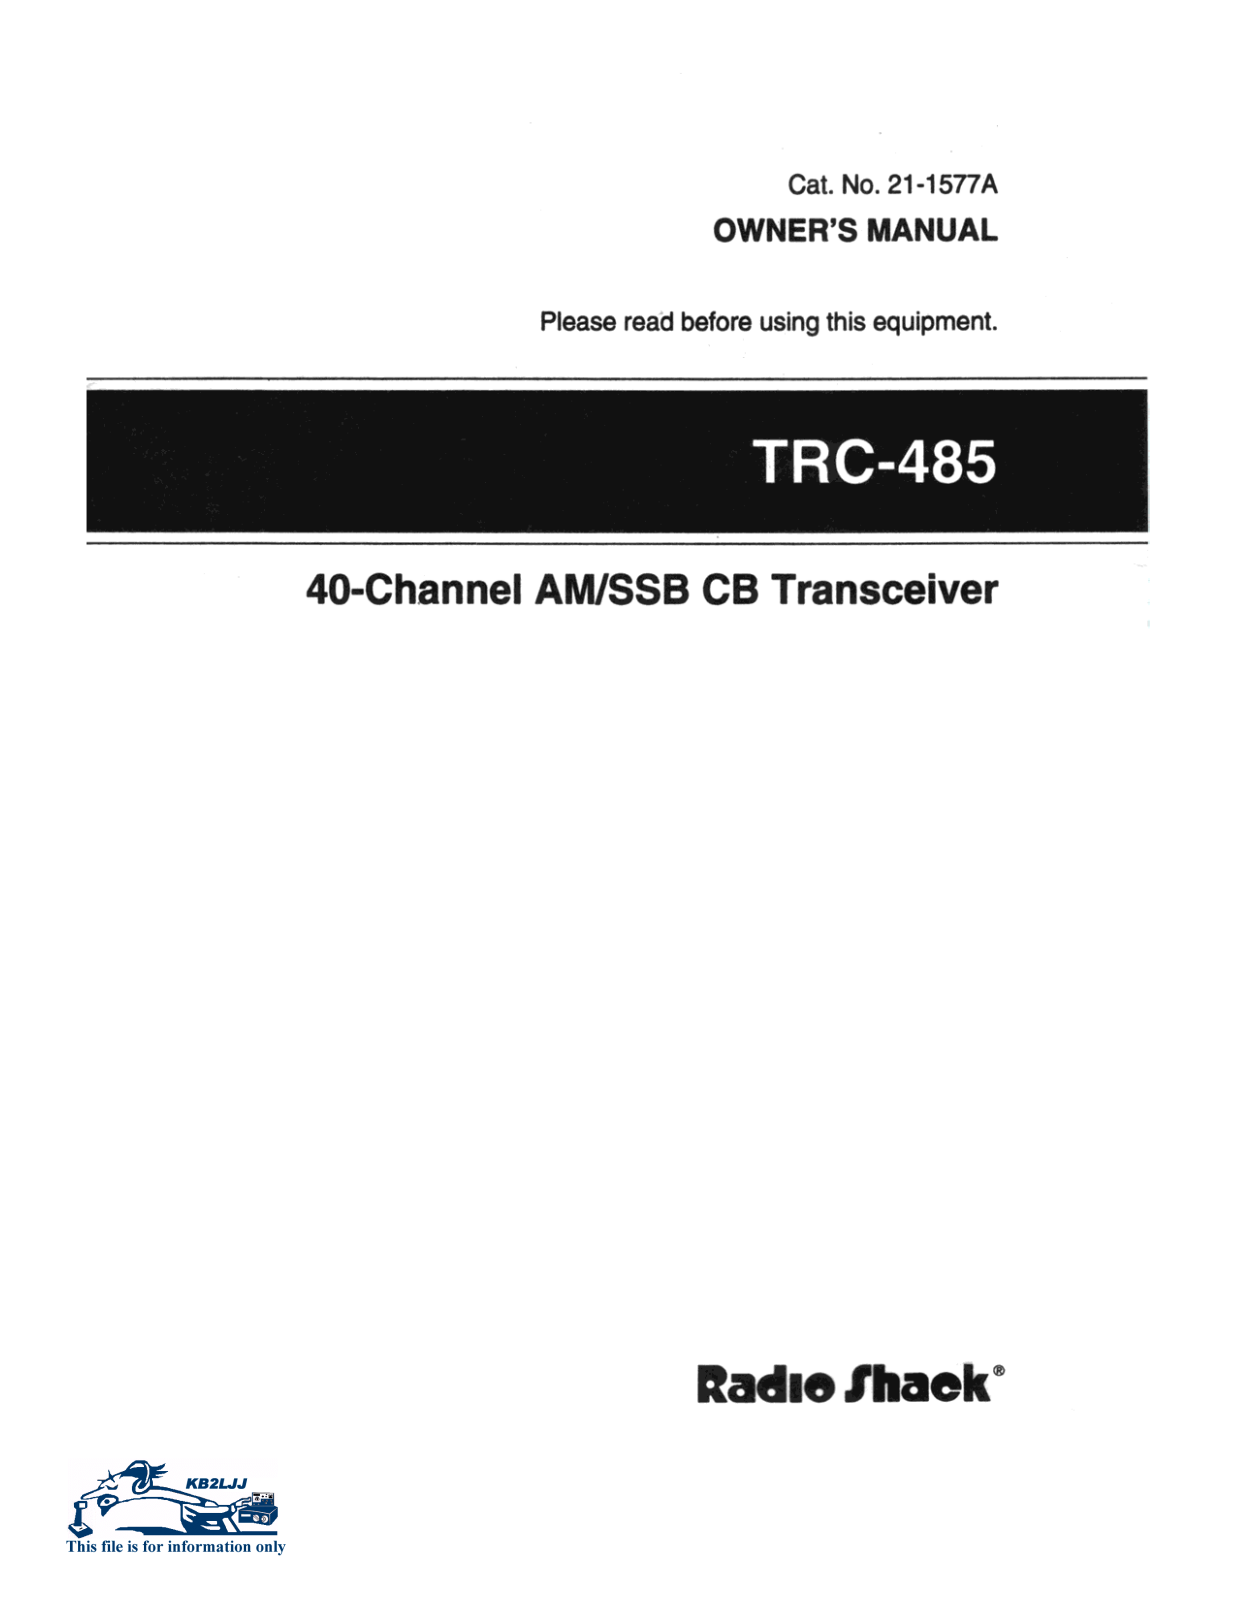 RadioShack TRC-485 Owners Manual